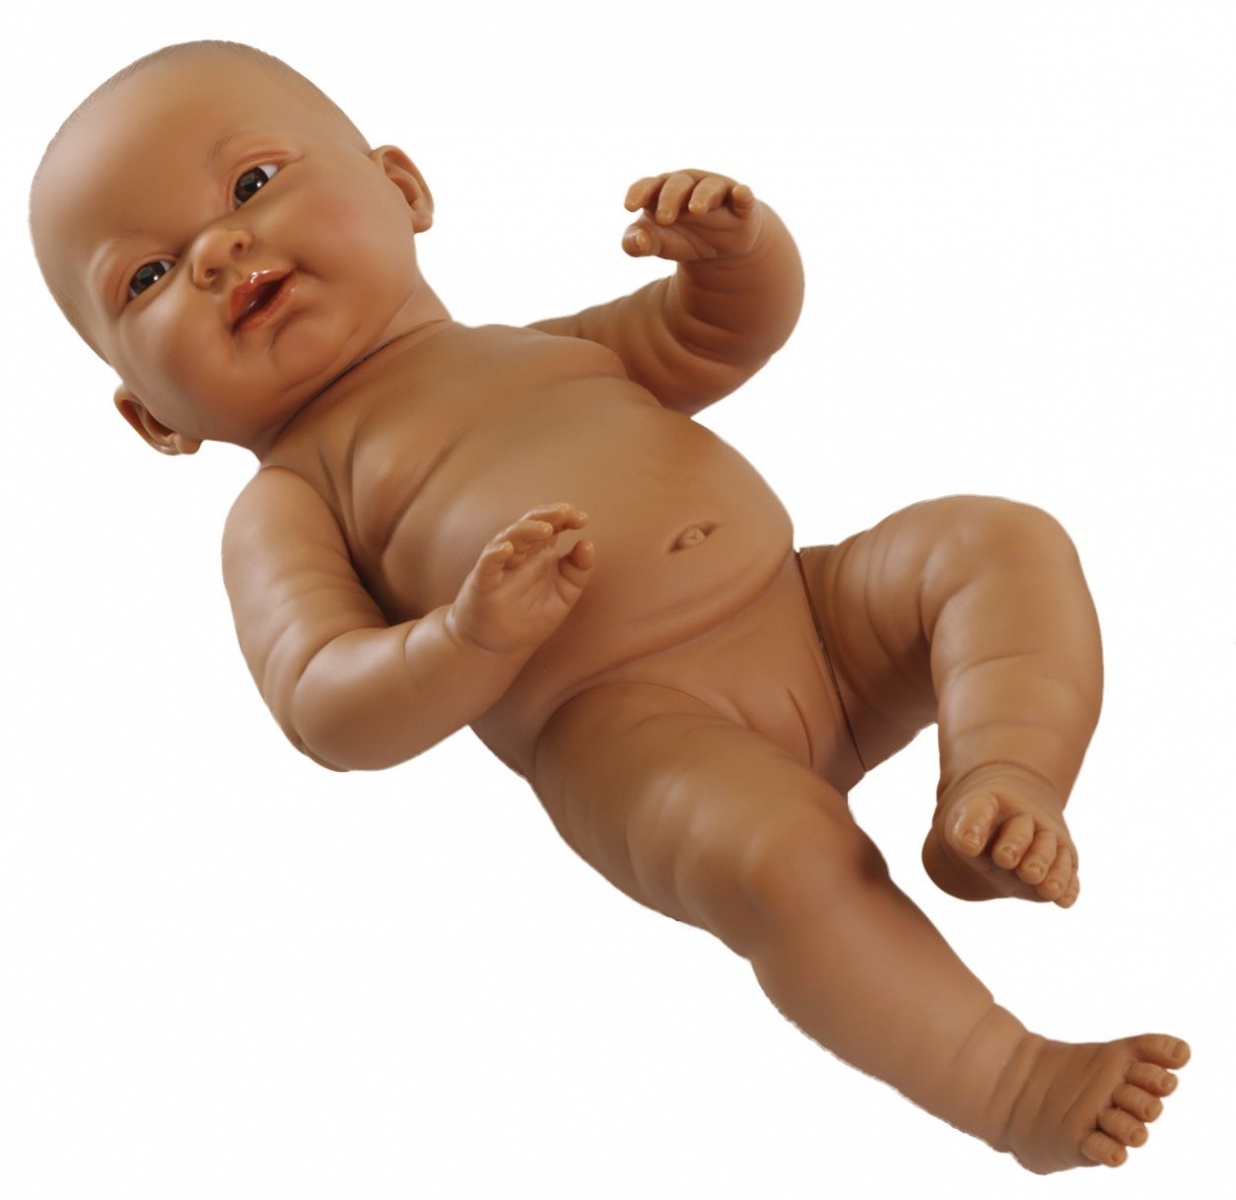 Файл:Anatomically-correct-baby-doll.jpg.